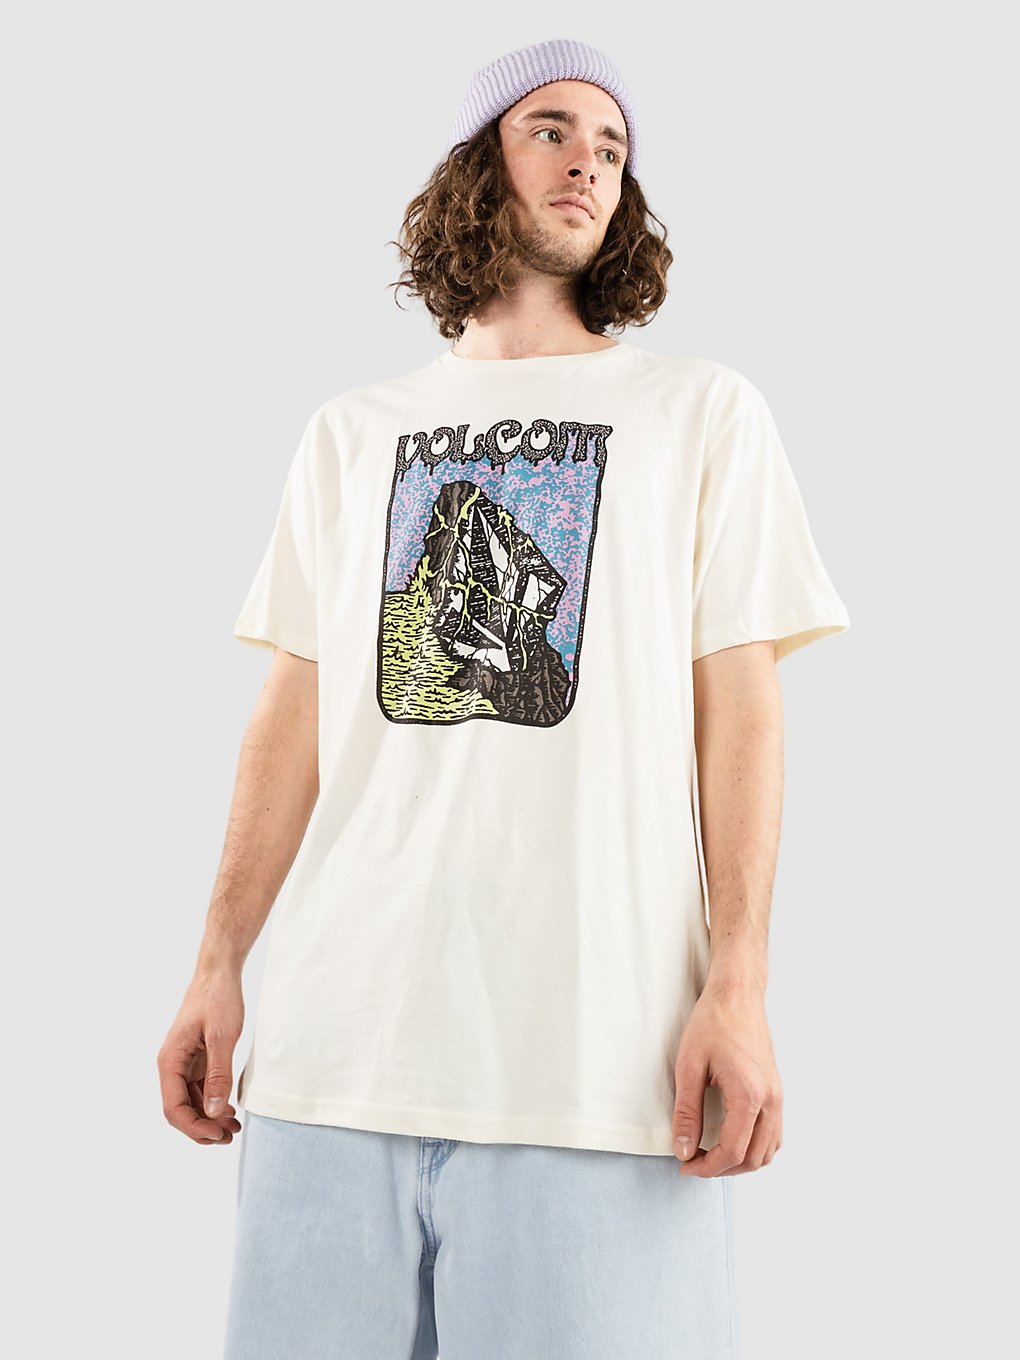 Volcom Fty Submerged T-Shirt off white kaufen